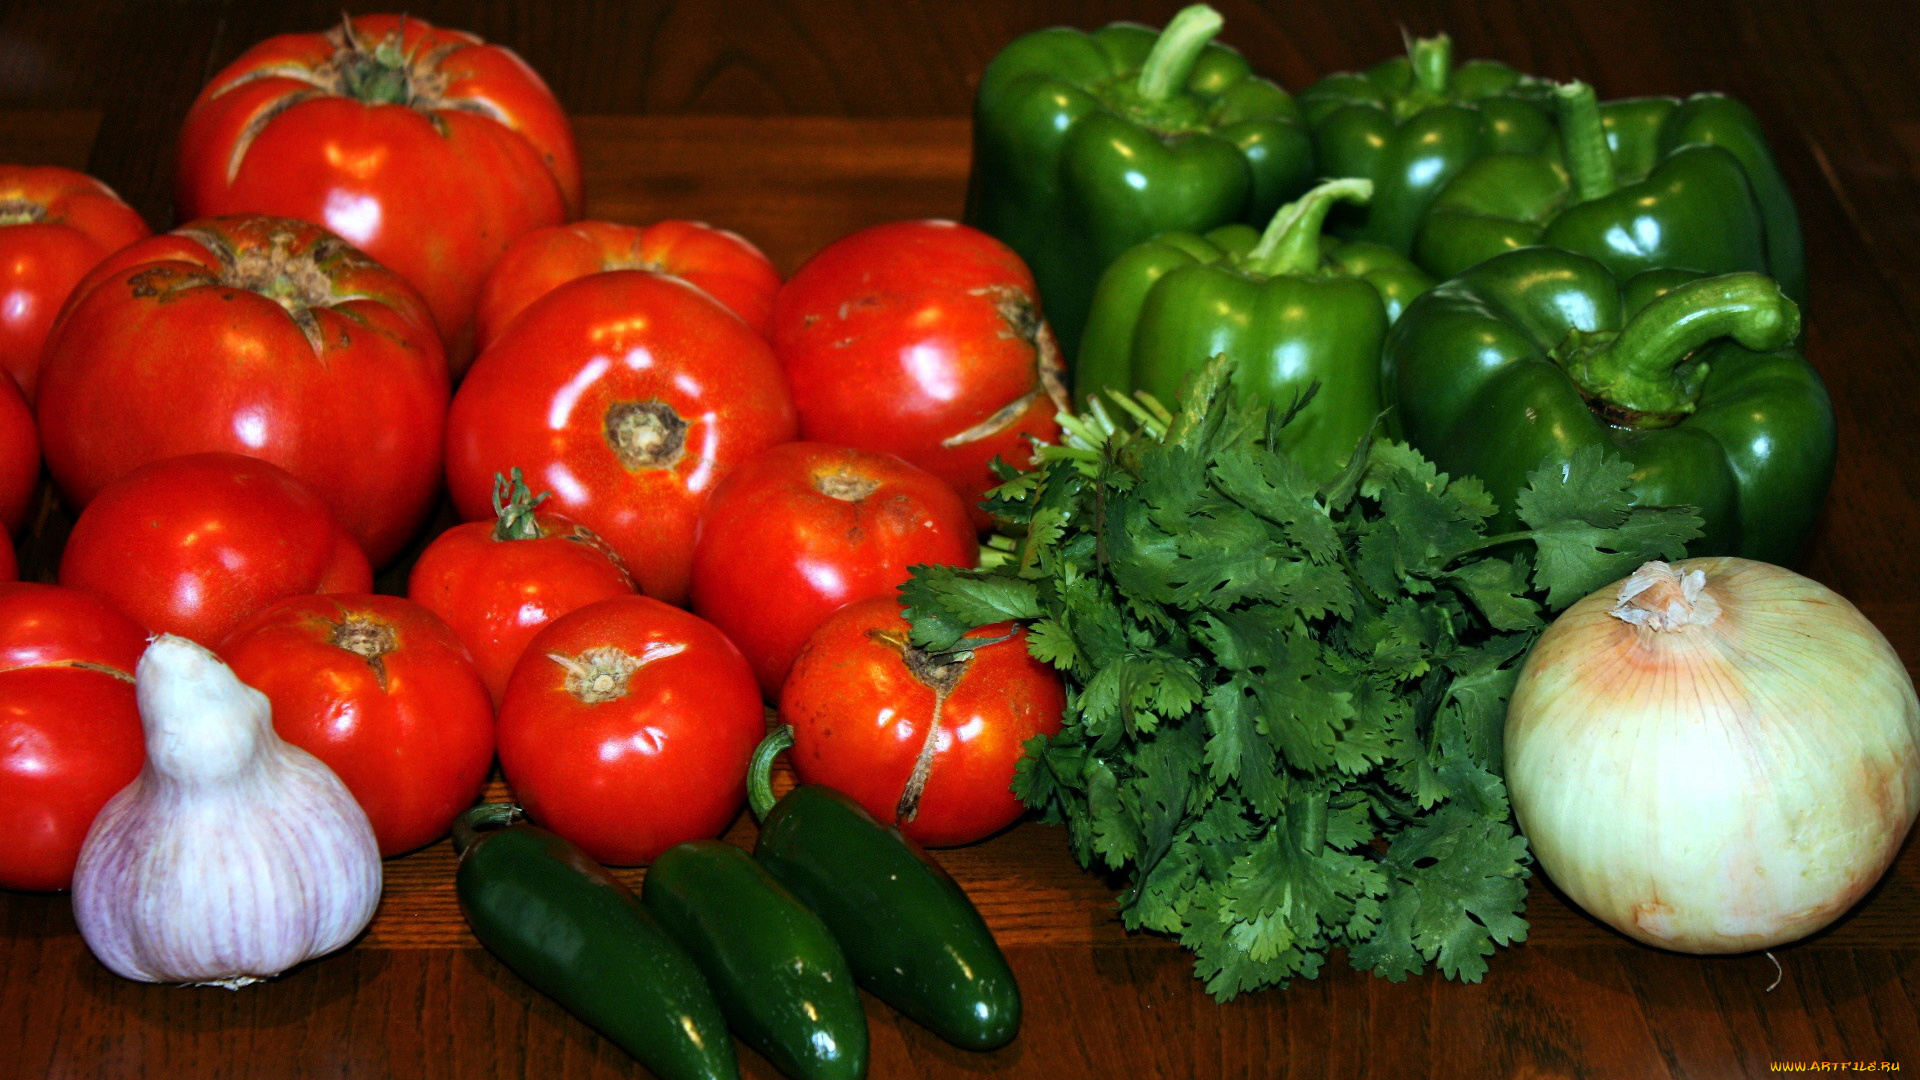 еда, овощи, перец, петрушка, чеснок, лук, помидоры, томаты